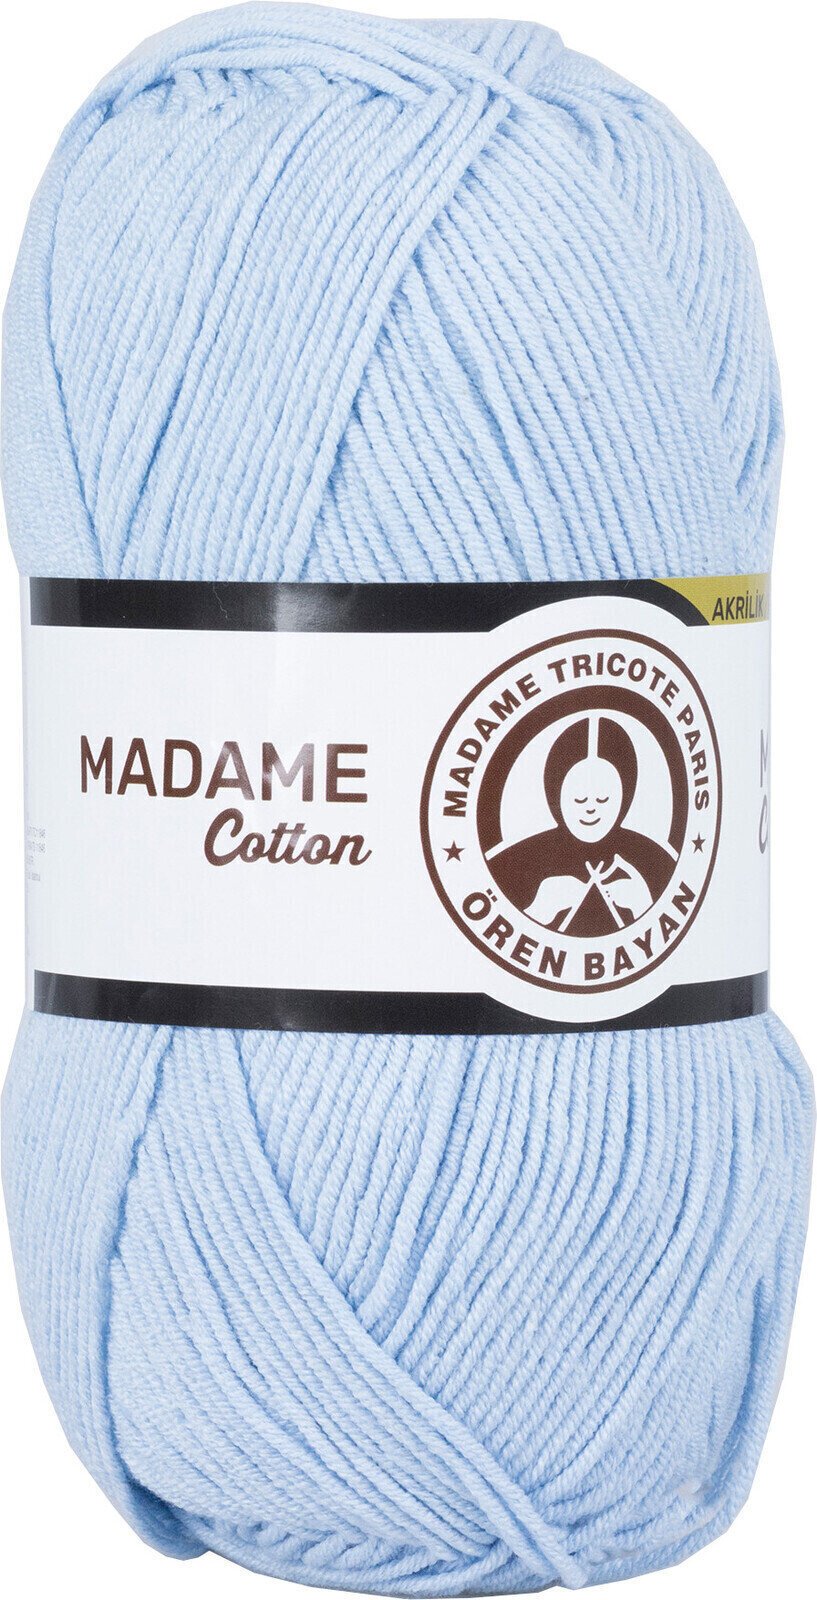 Knitting Yarn Madame Tricote Paris Madame Cotton 014 Light Blue